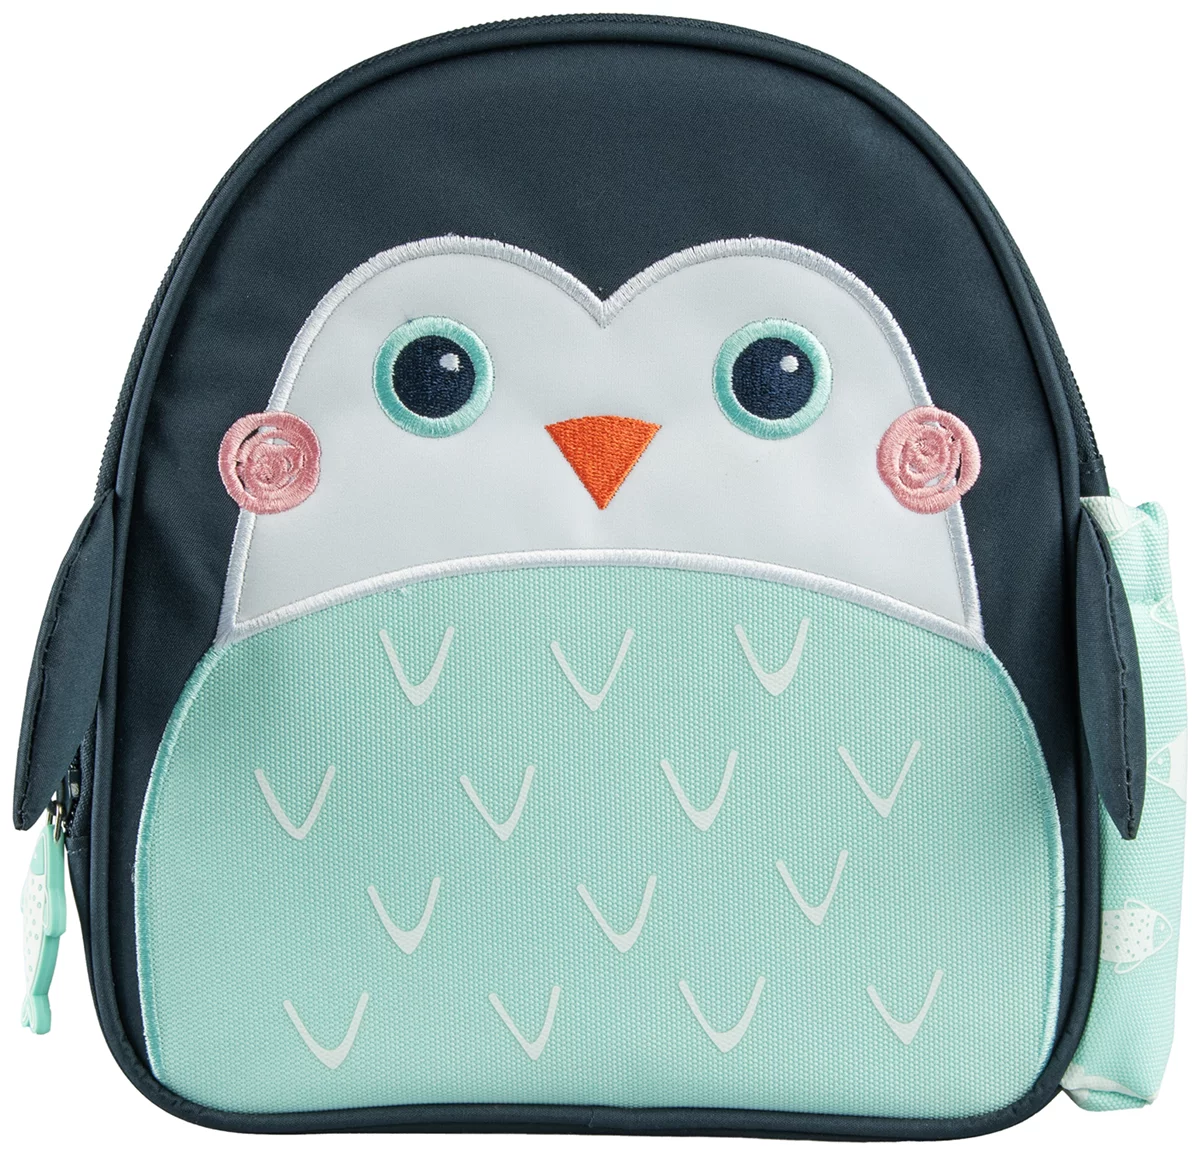 Ruksak Planet Buddies Penguin Backpack lunch bag black/blue (44591)